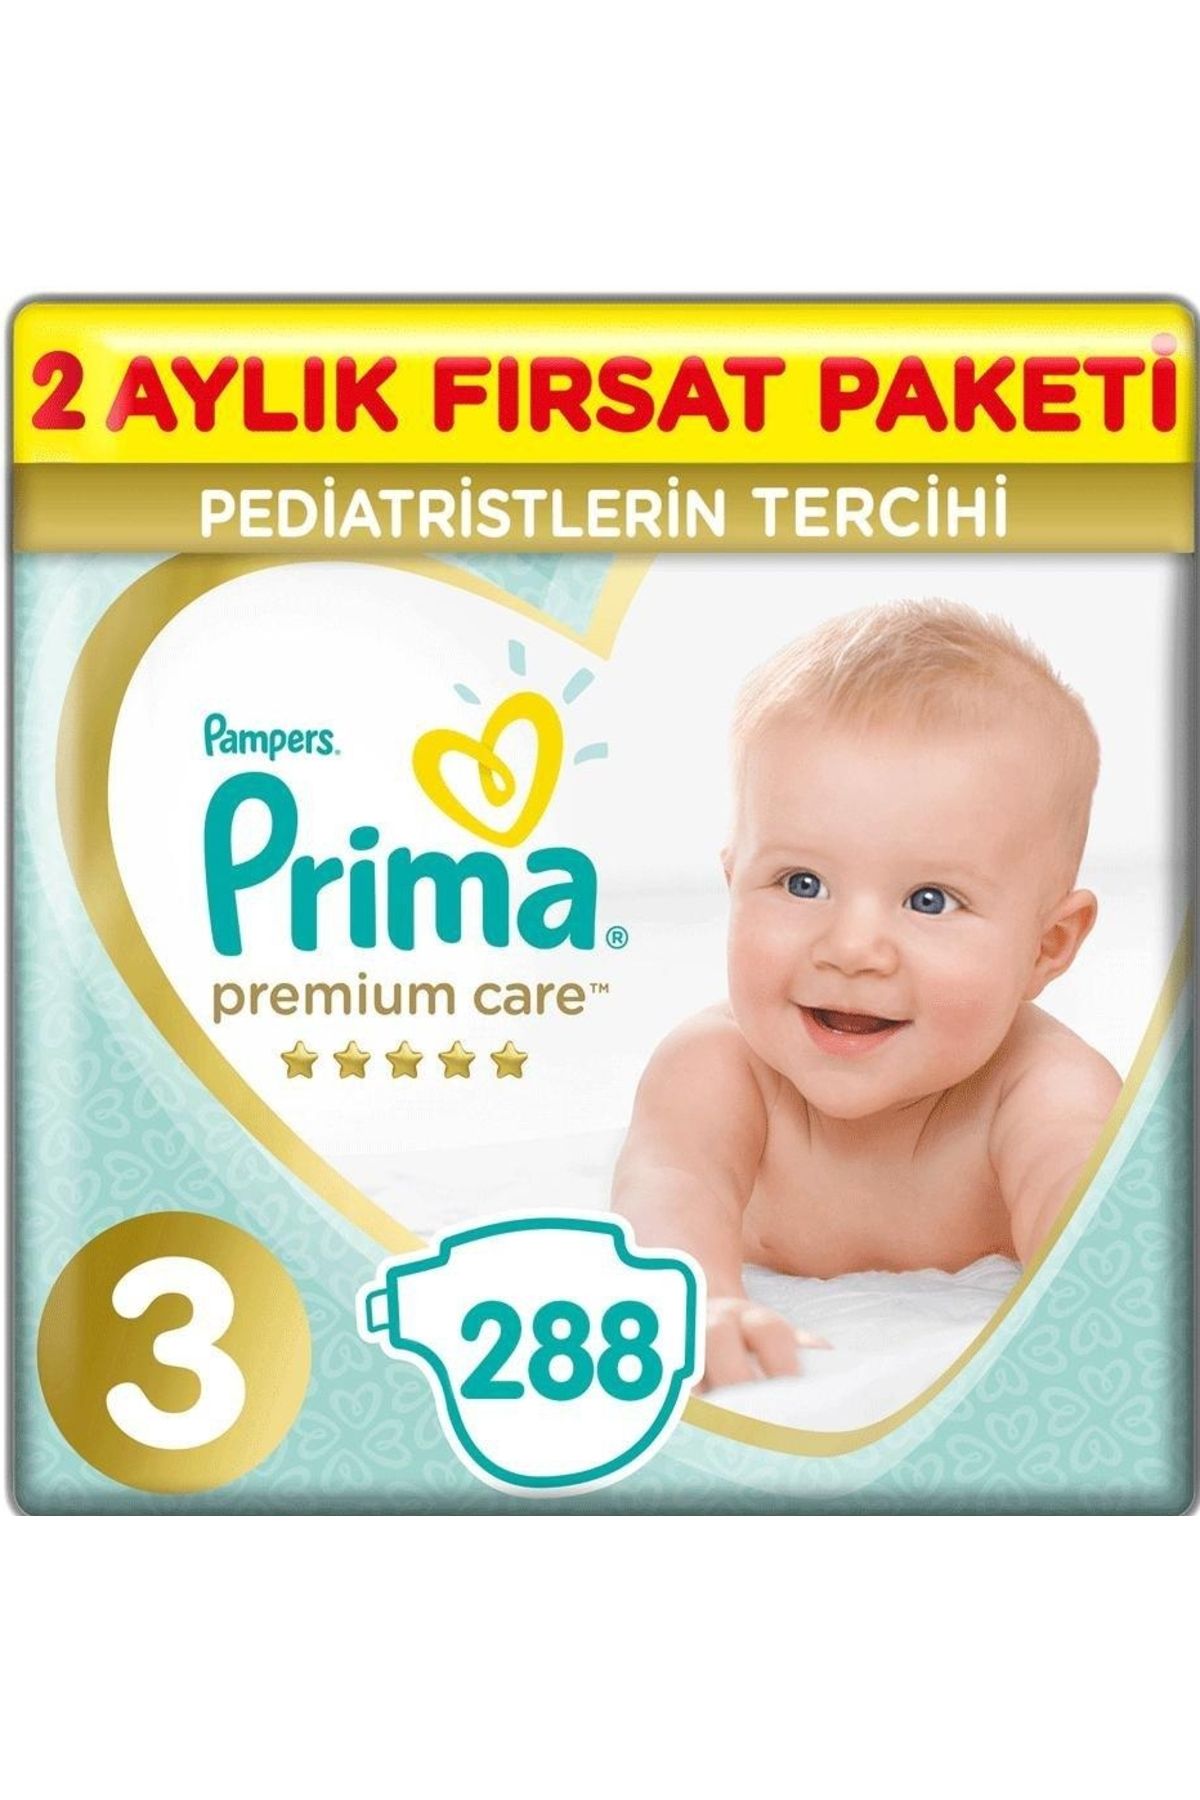 Prima Bebek Bezi Premium Care 3 Beden 144 Adet Aylık Fırsat Paketi X 2 Adet